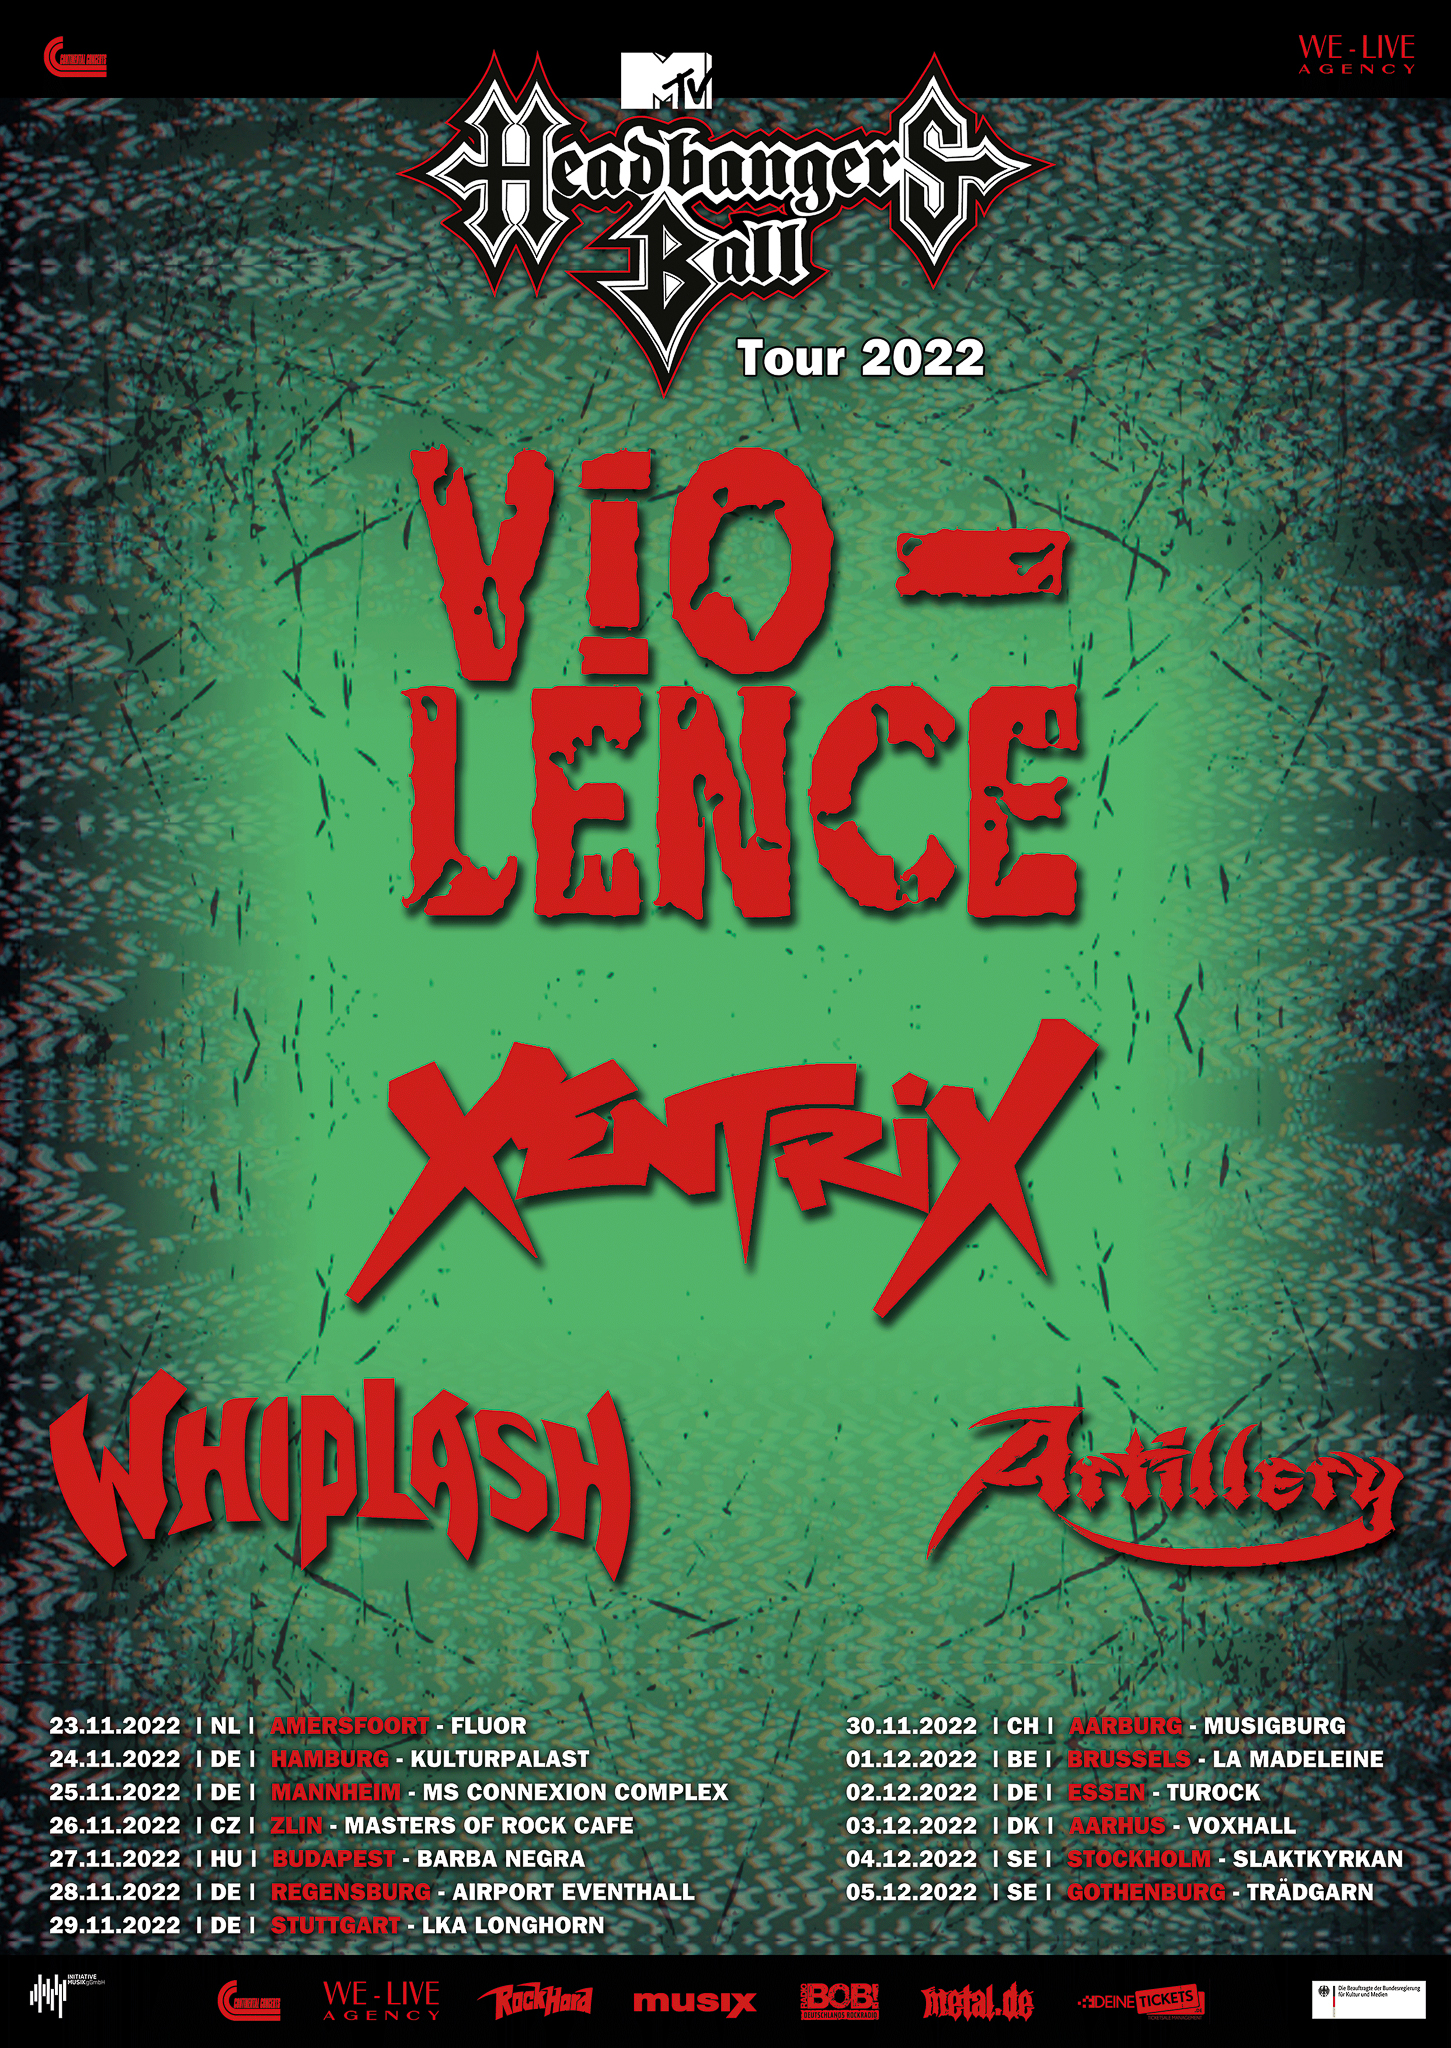 MTV Headbanger`s Ball Tour 2022 mit Vio-Lence